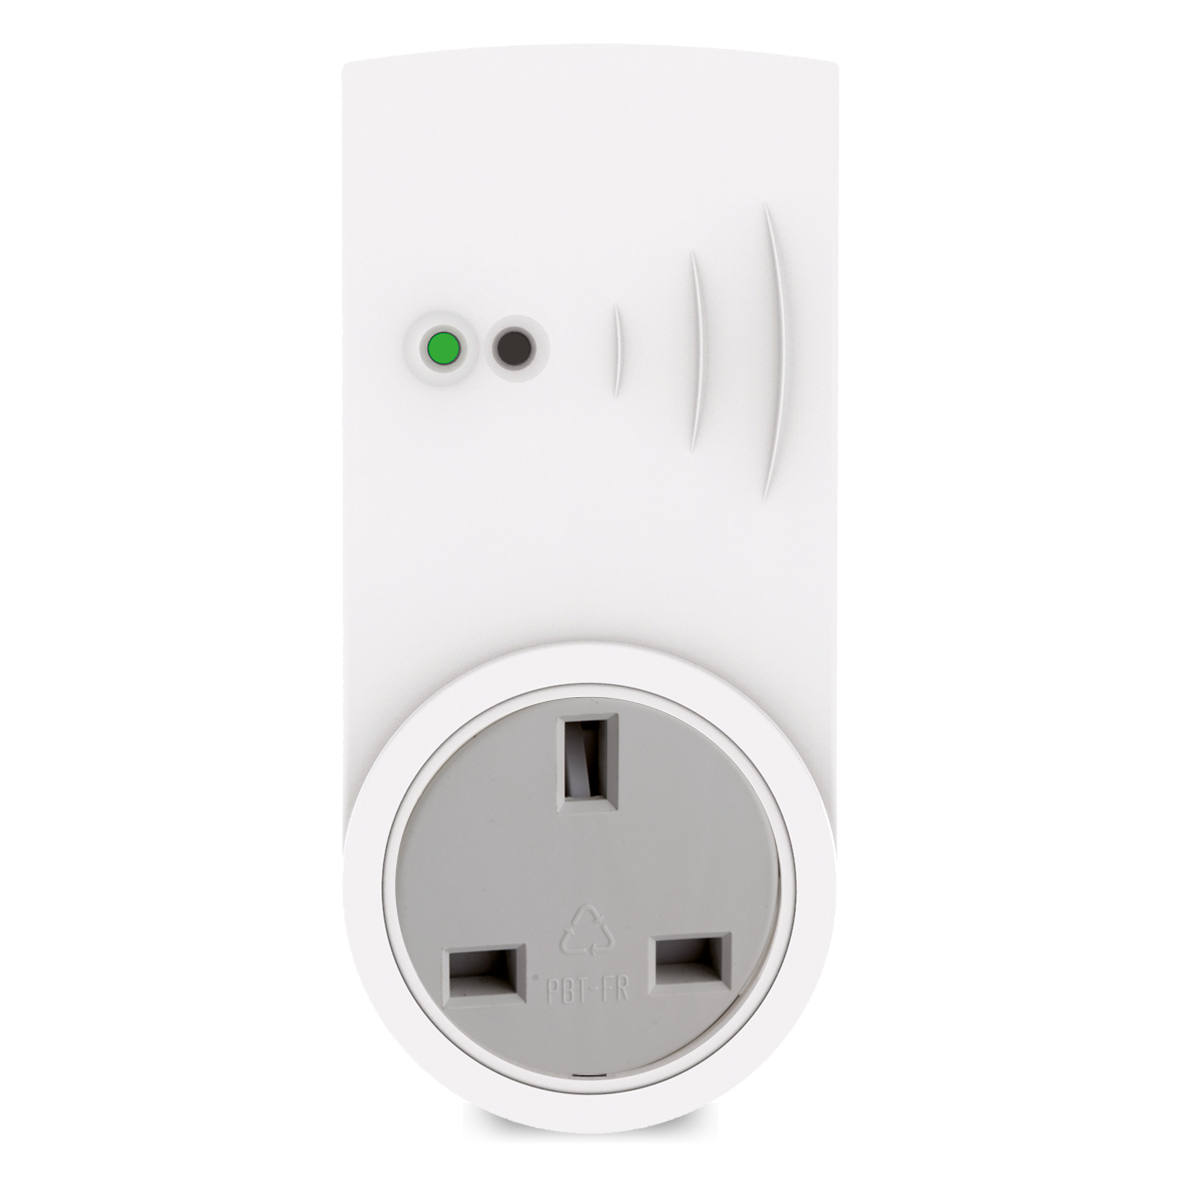 Smart Plug available in Qatar, Oman, Muscat, Kuwait, UK